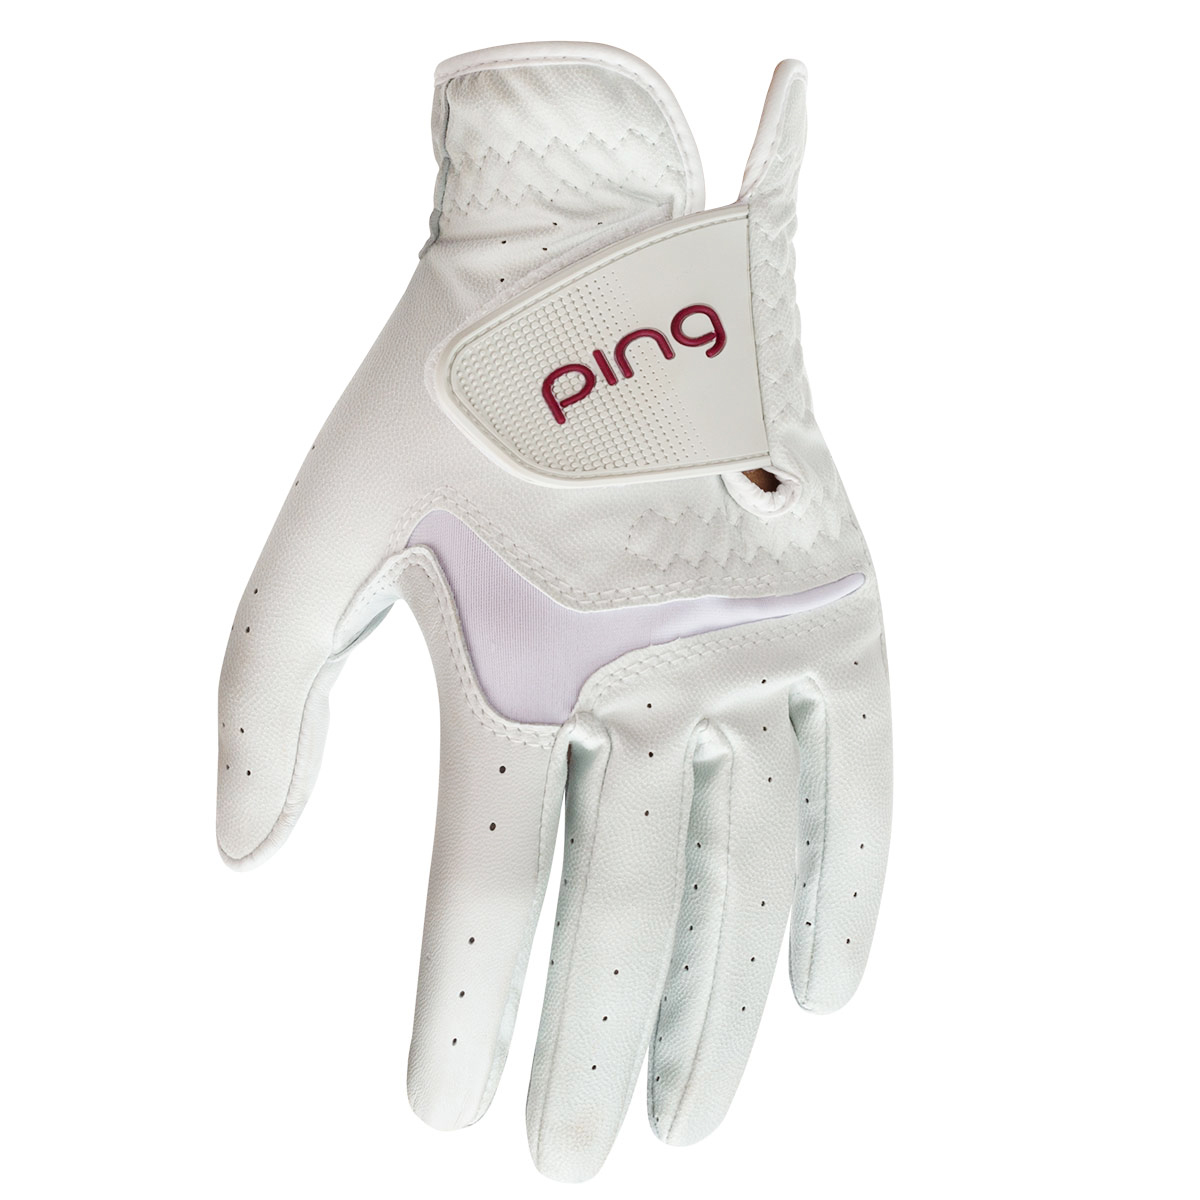 Ping golf gloves best price